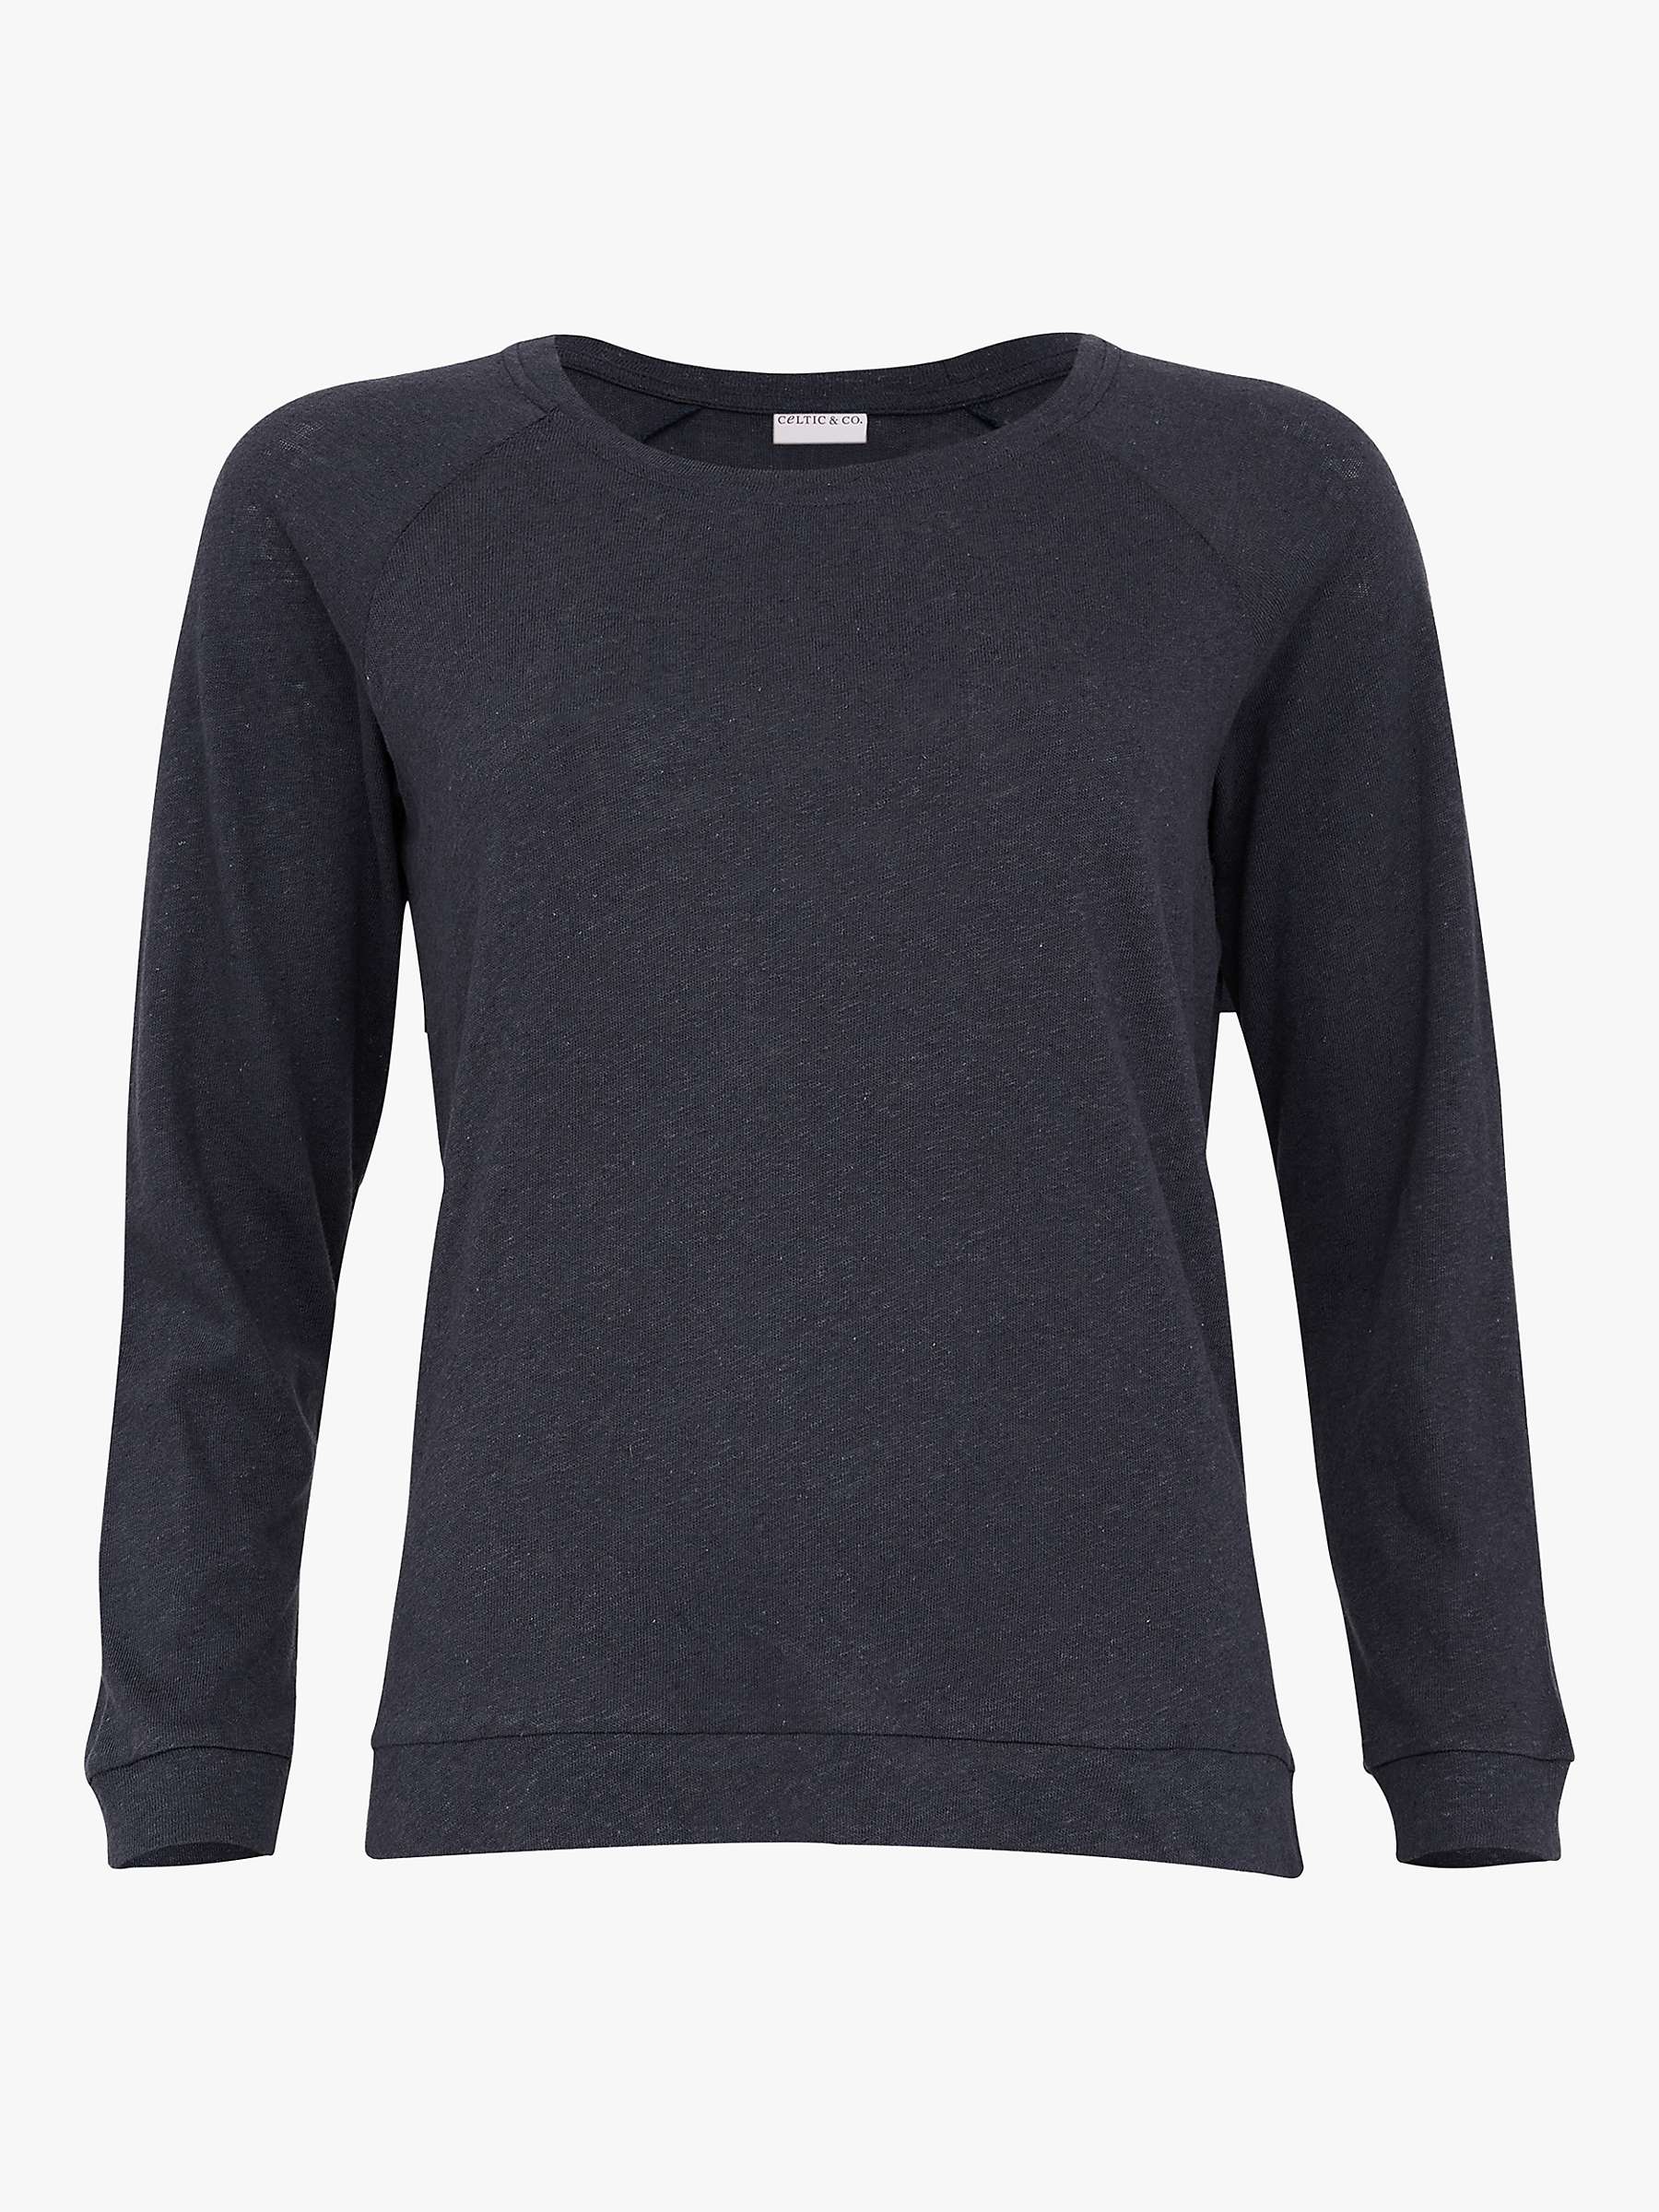 Buy Celtic & Co. Linen Blend Sweatshirt, Navy Online at johnlewis.com